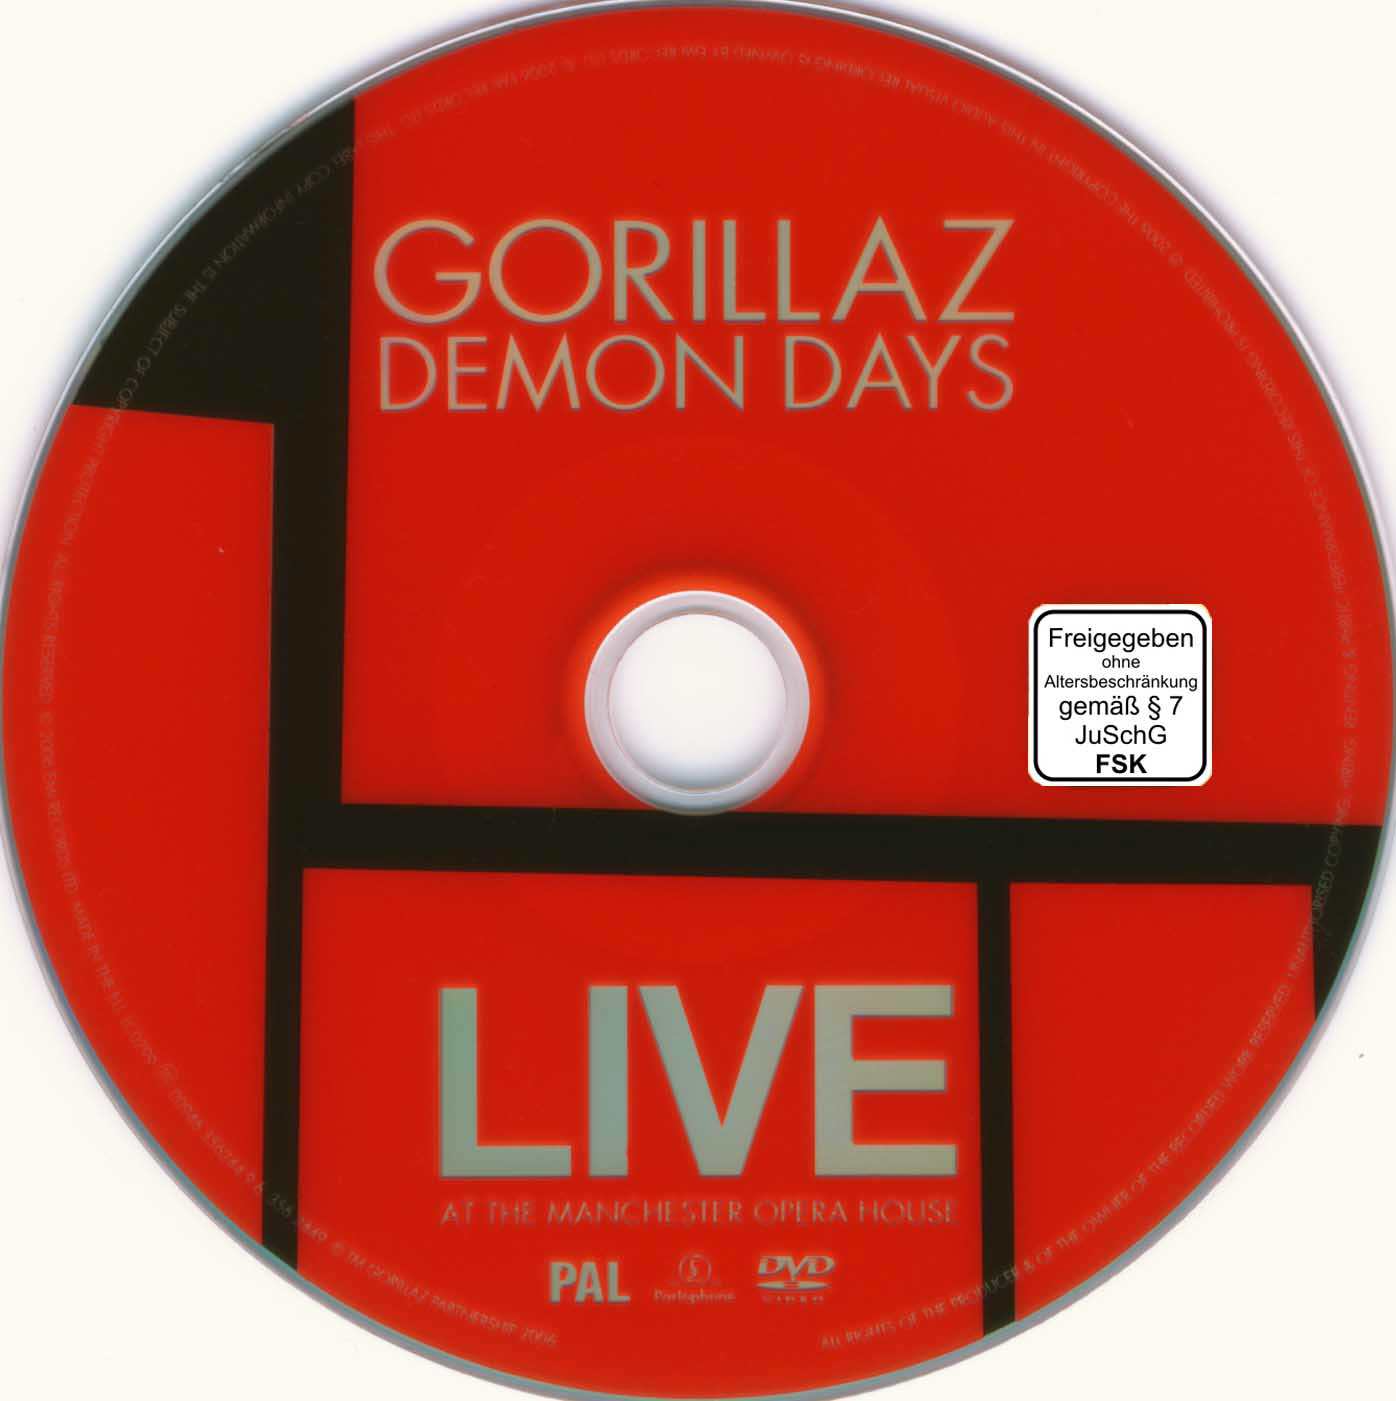 who played bass on gorillaz demon days live